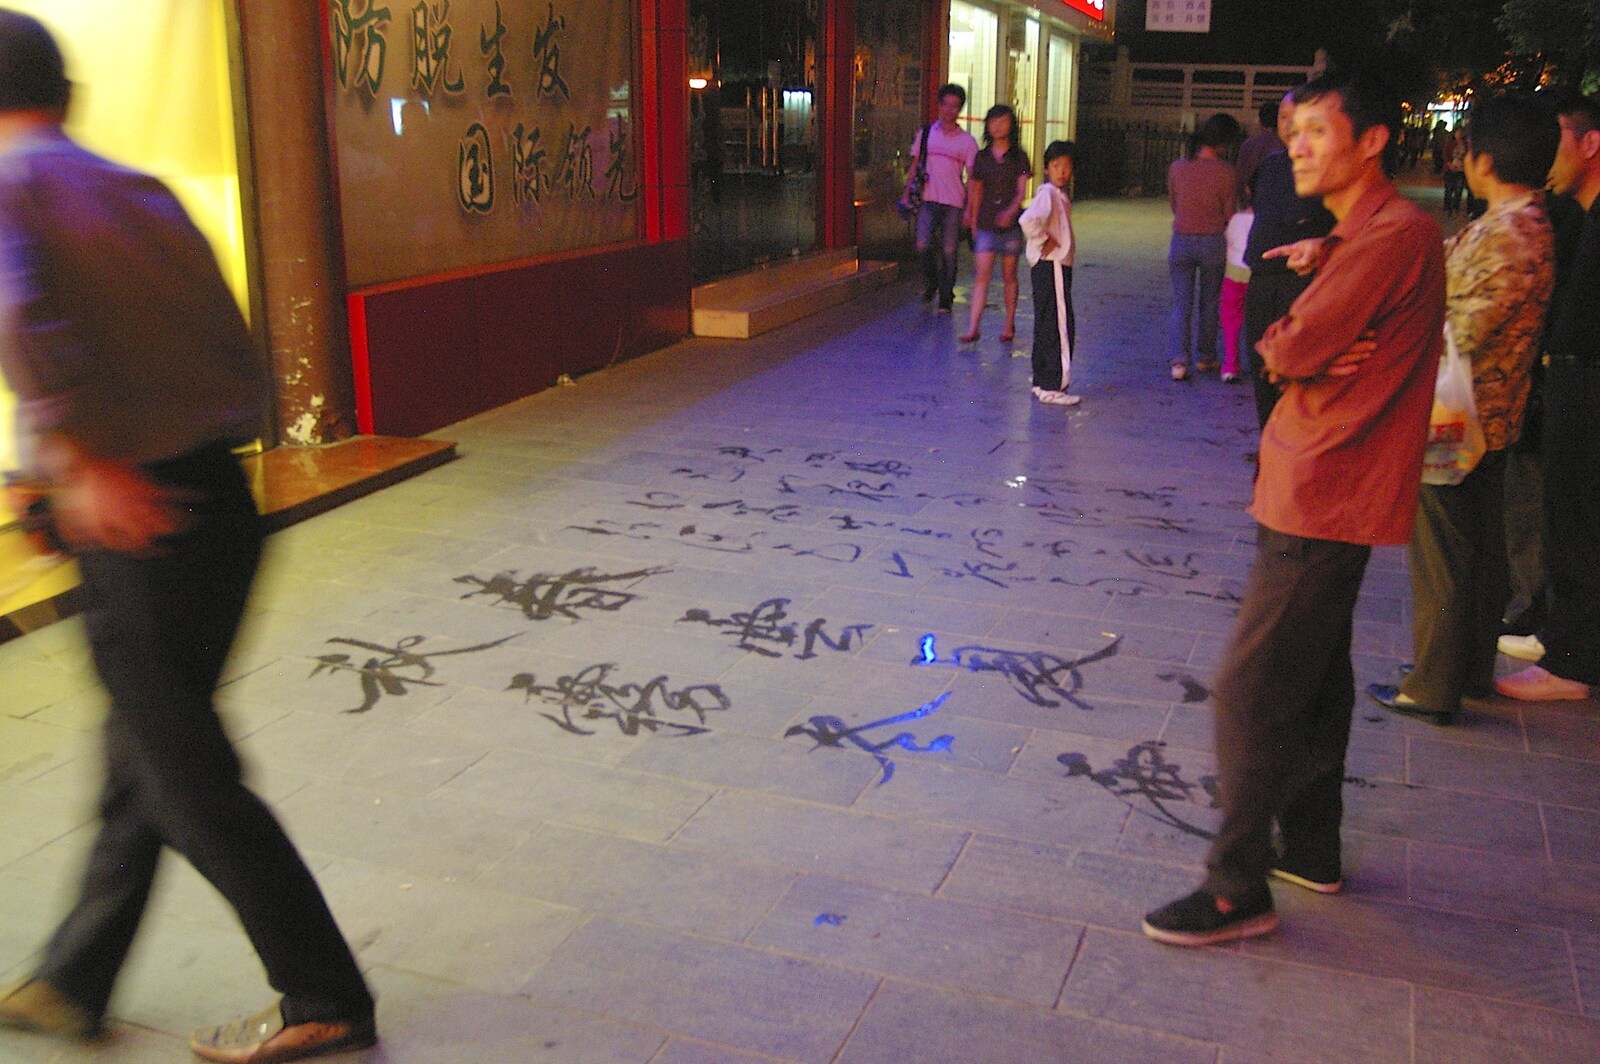 Pavement art from Nanjing by Night, Nanjing, Jiangsu Province, China - 4th October 2006